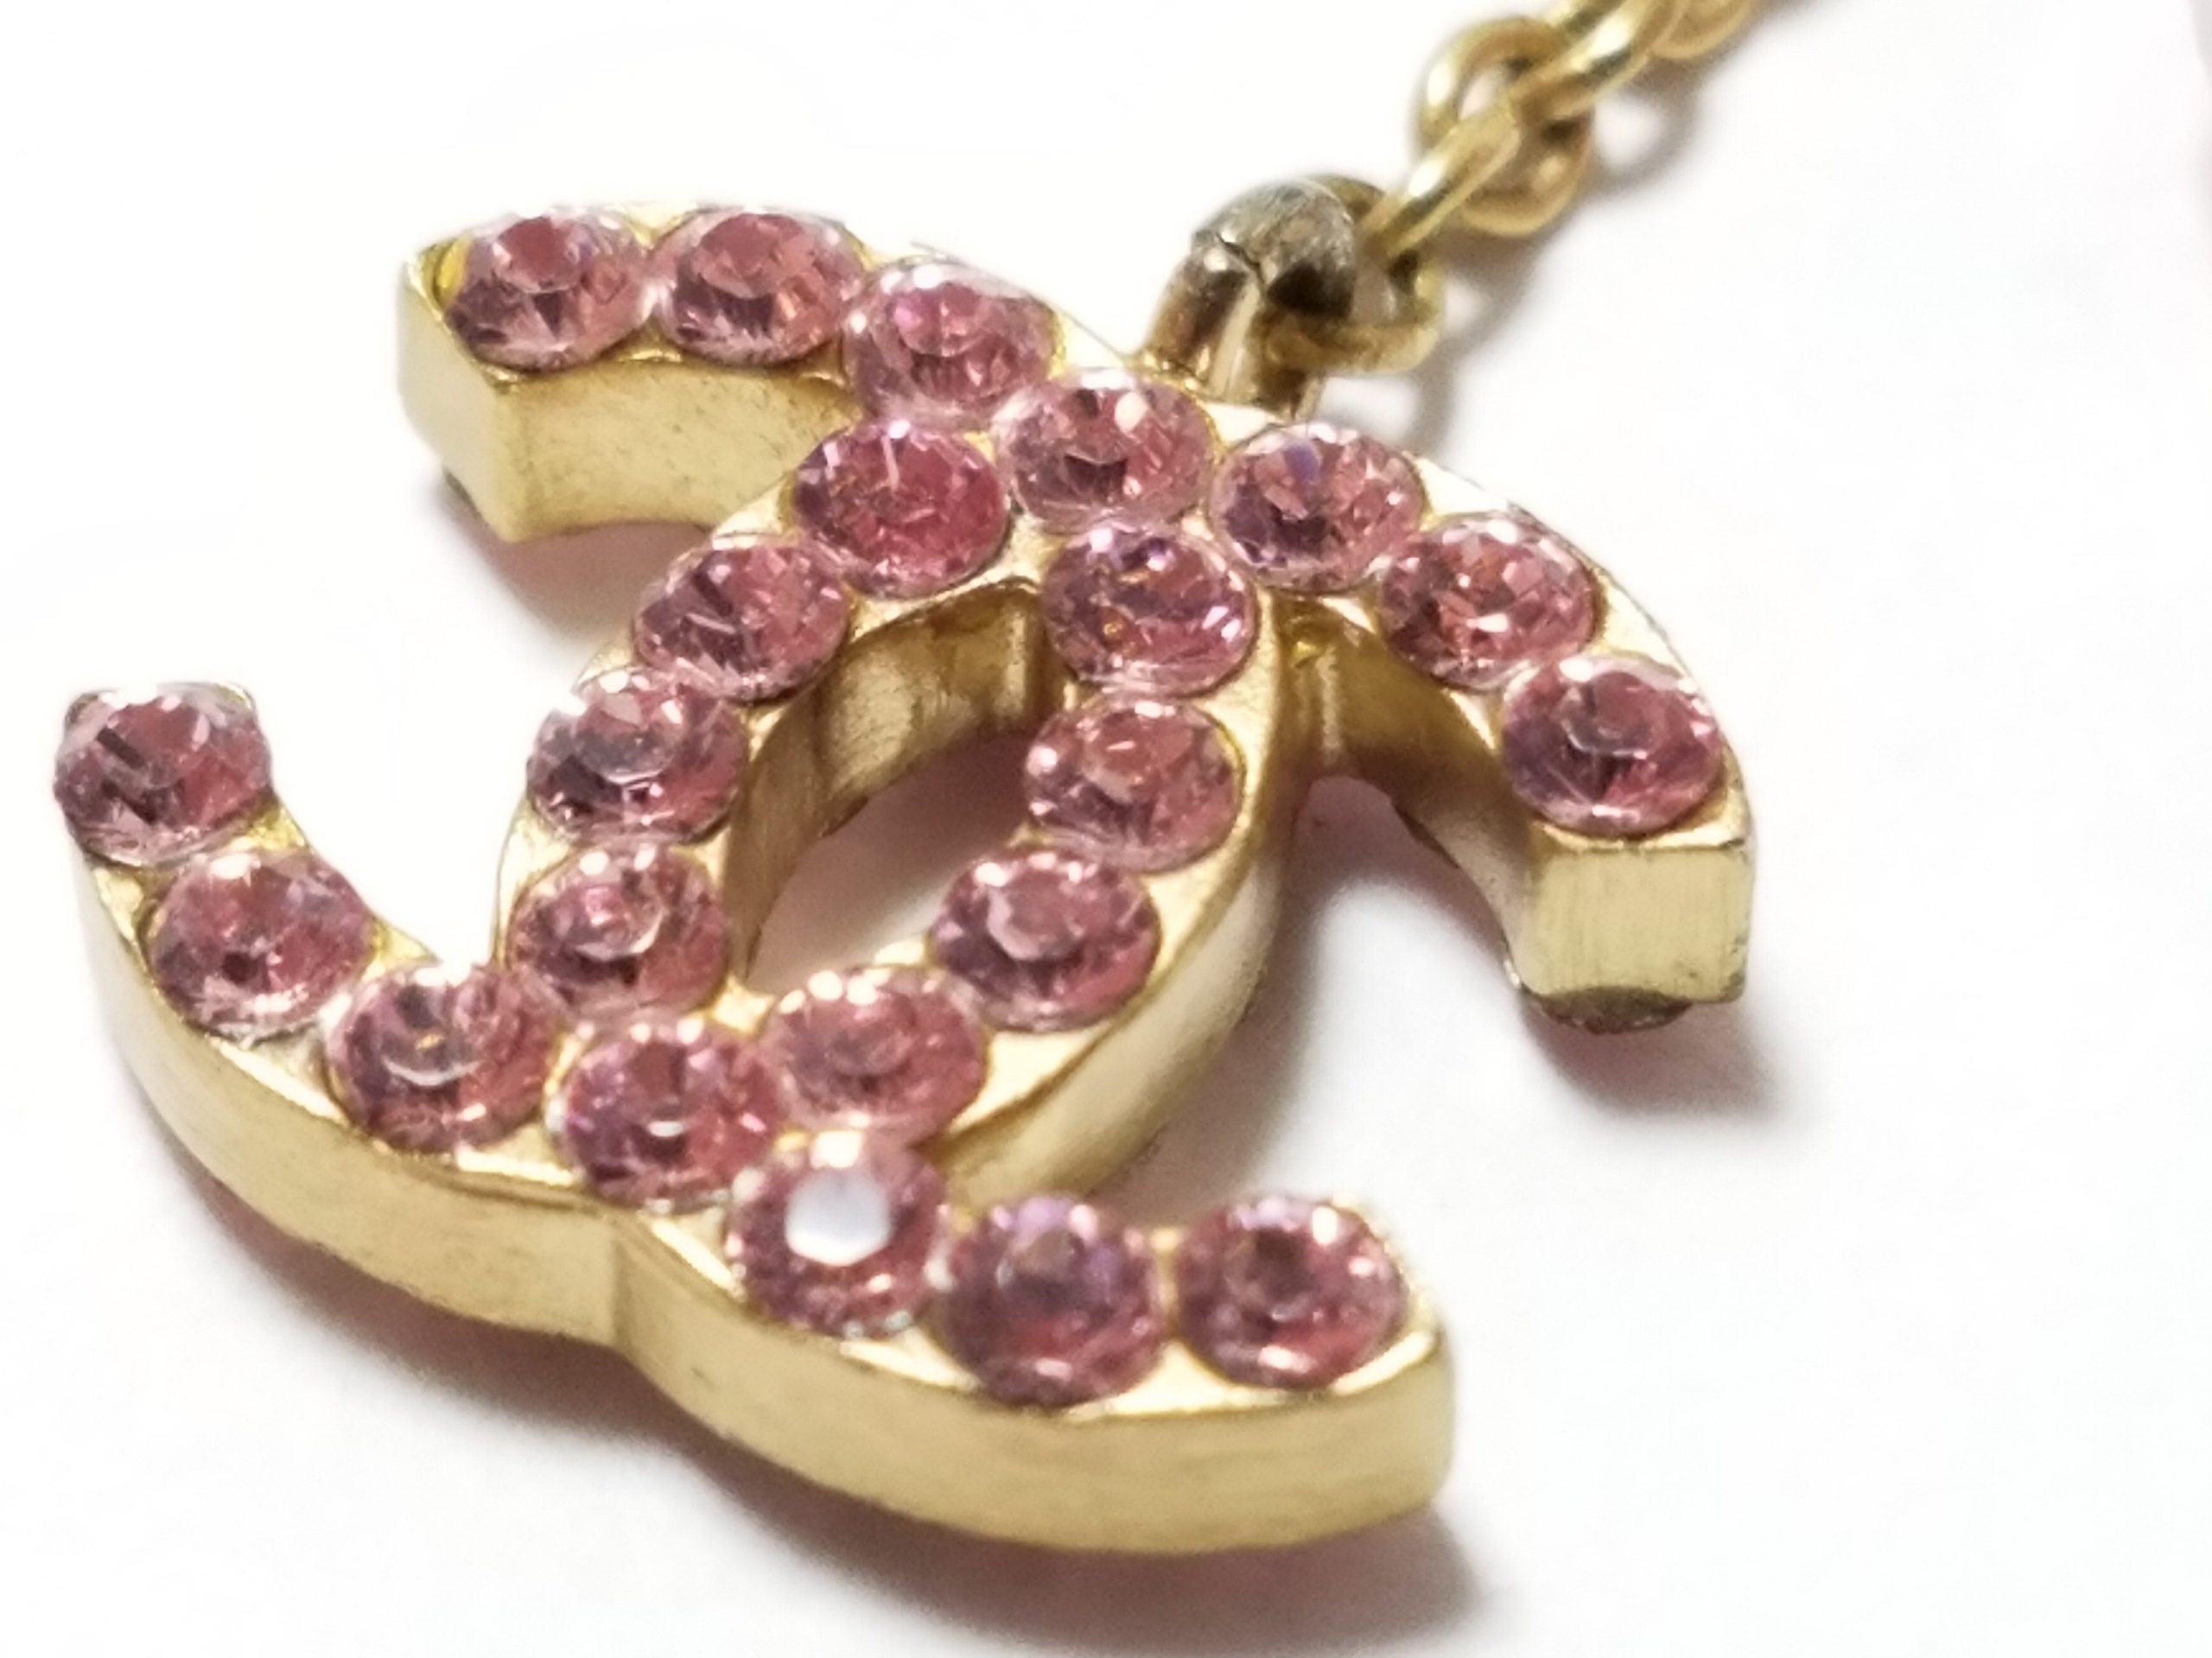 CHANEL Pendant Necklace Gold CC Logo stone pink rhinestone 07P Ex